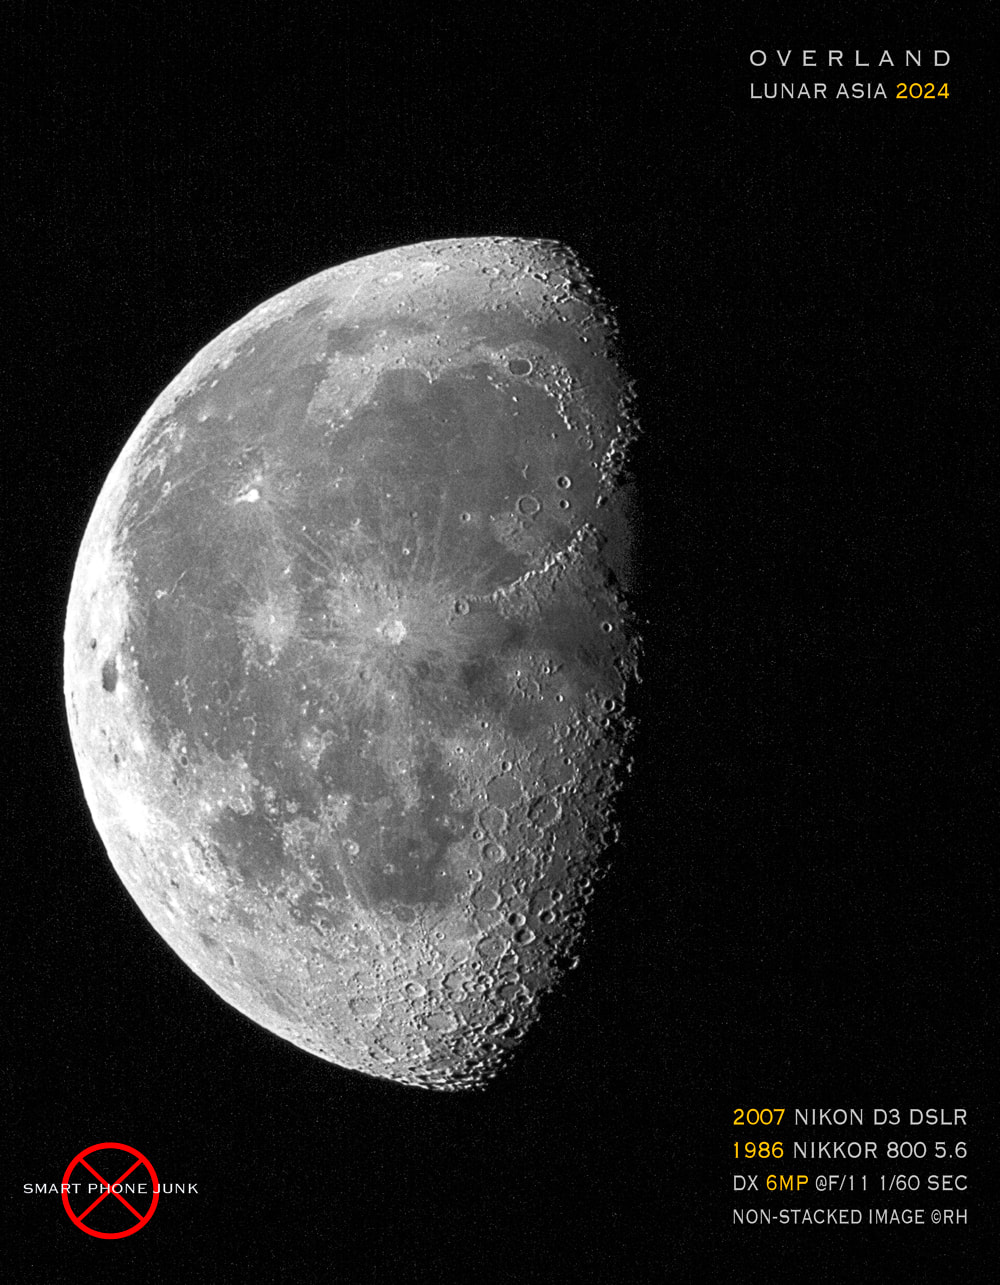 solo overland travel 2020s, DSLR Nikon D3 2024 6MP lunar image by Rick Hemi